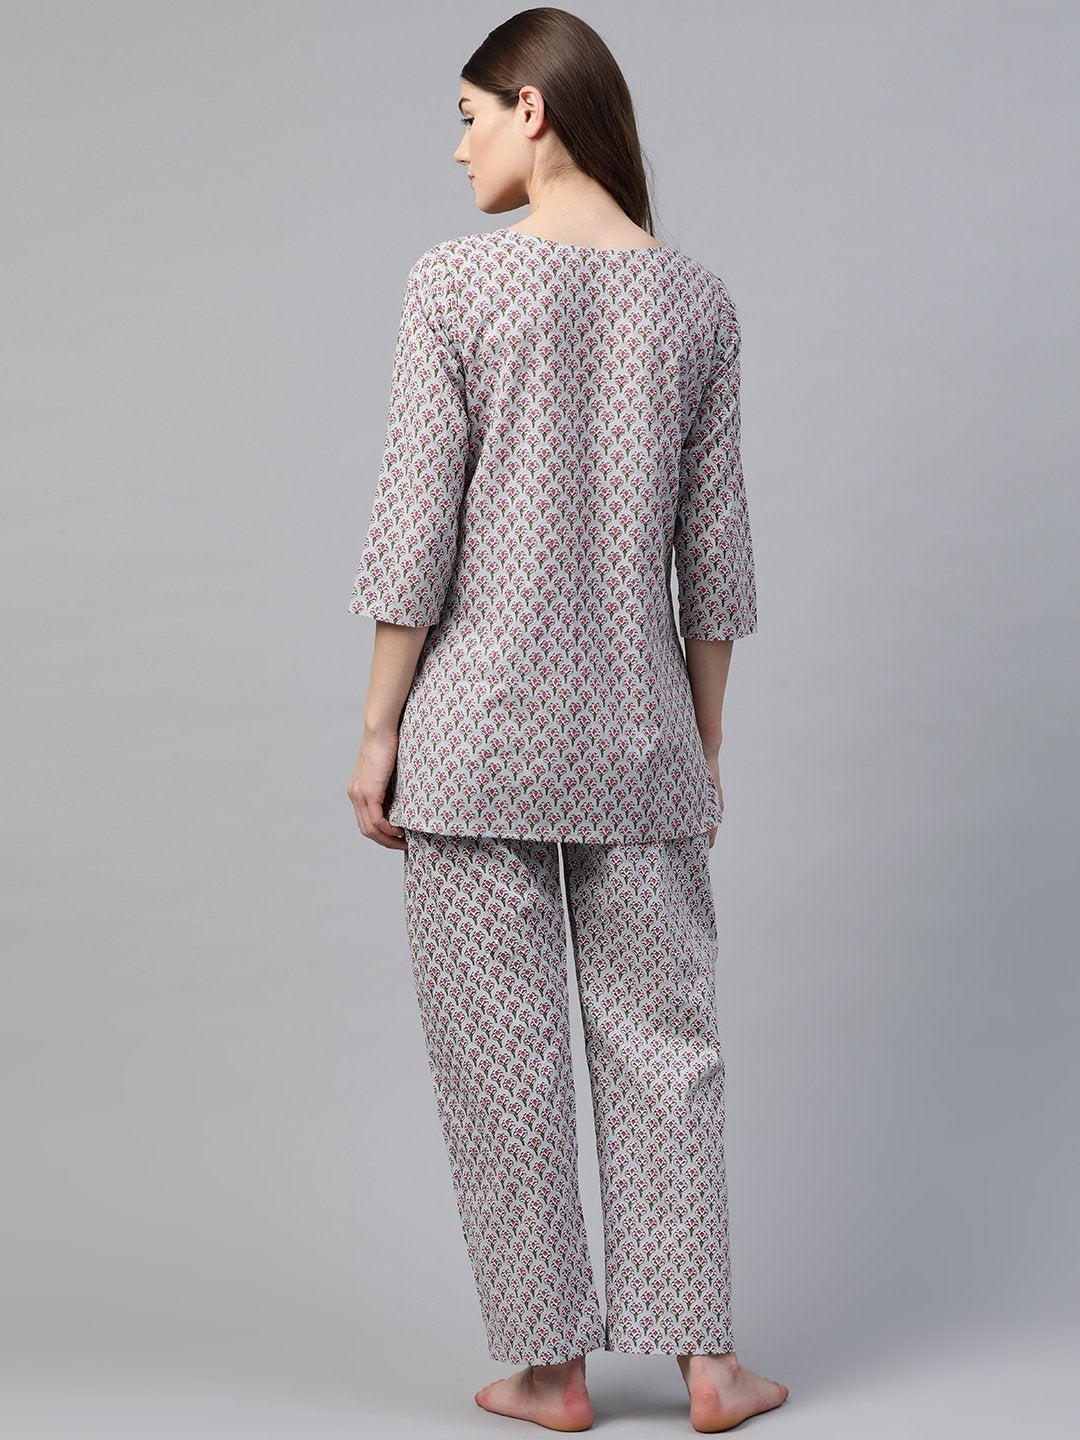 Women's Grey Printed Loungewear/Nightwear - Noz2Toz